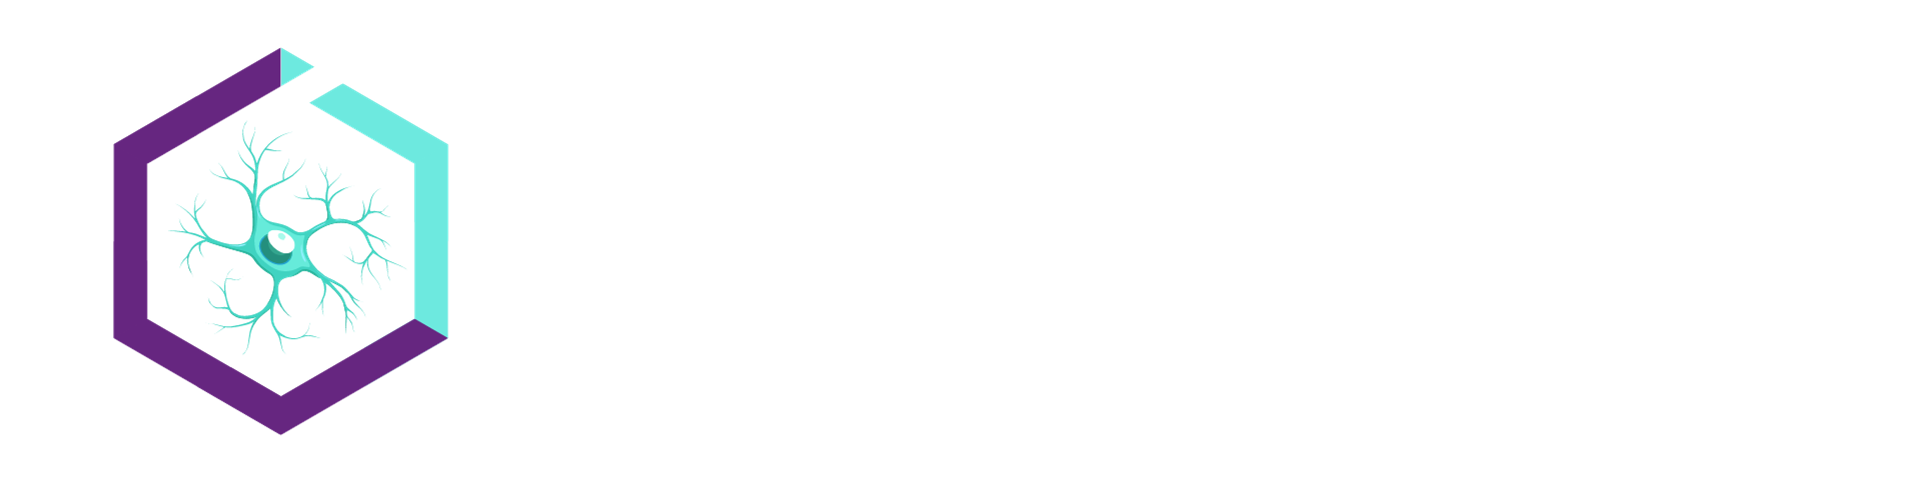 Neuroimmunology_DD_Summit_Logo